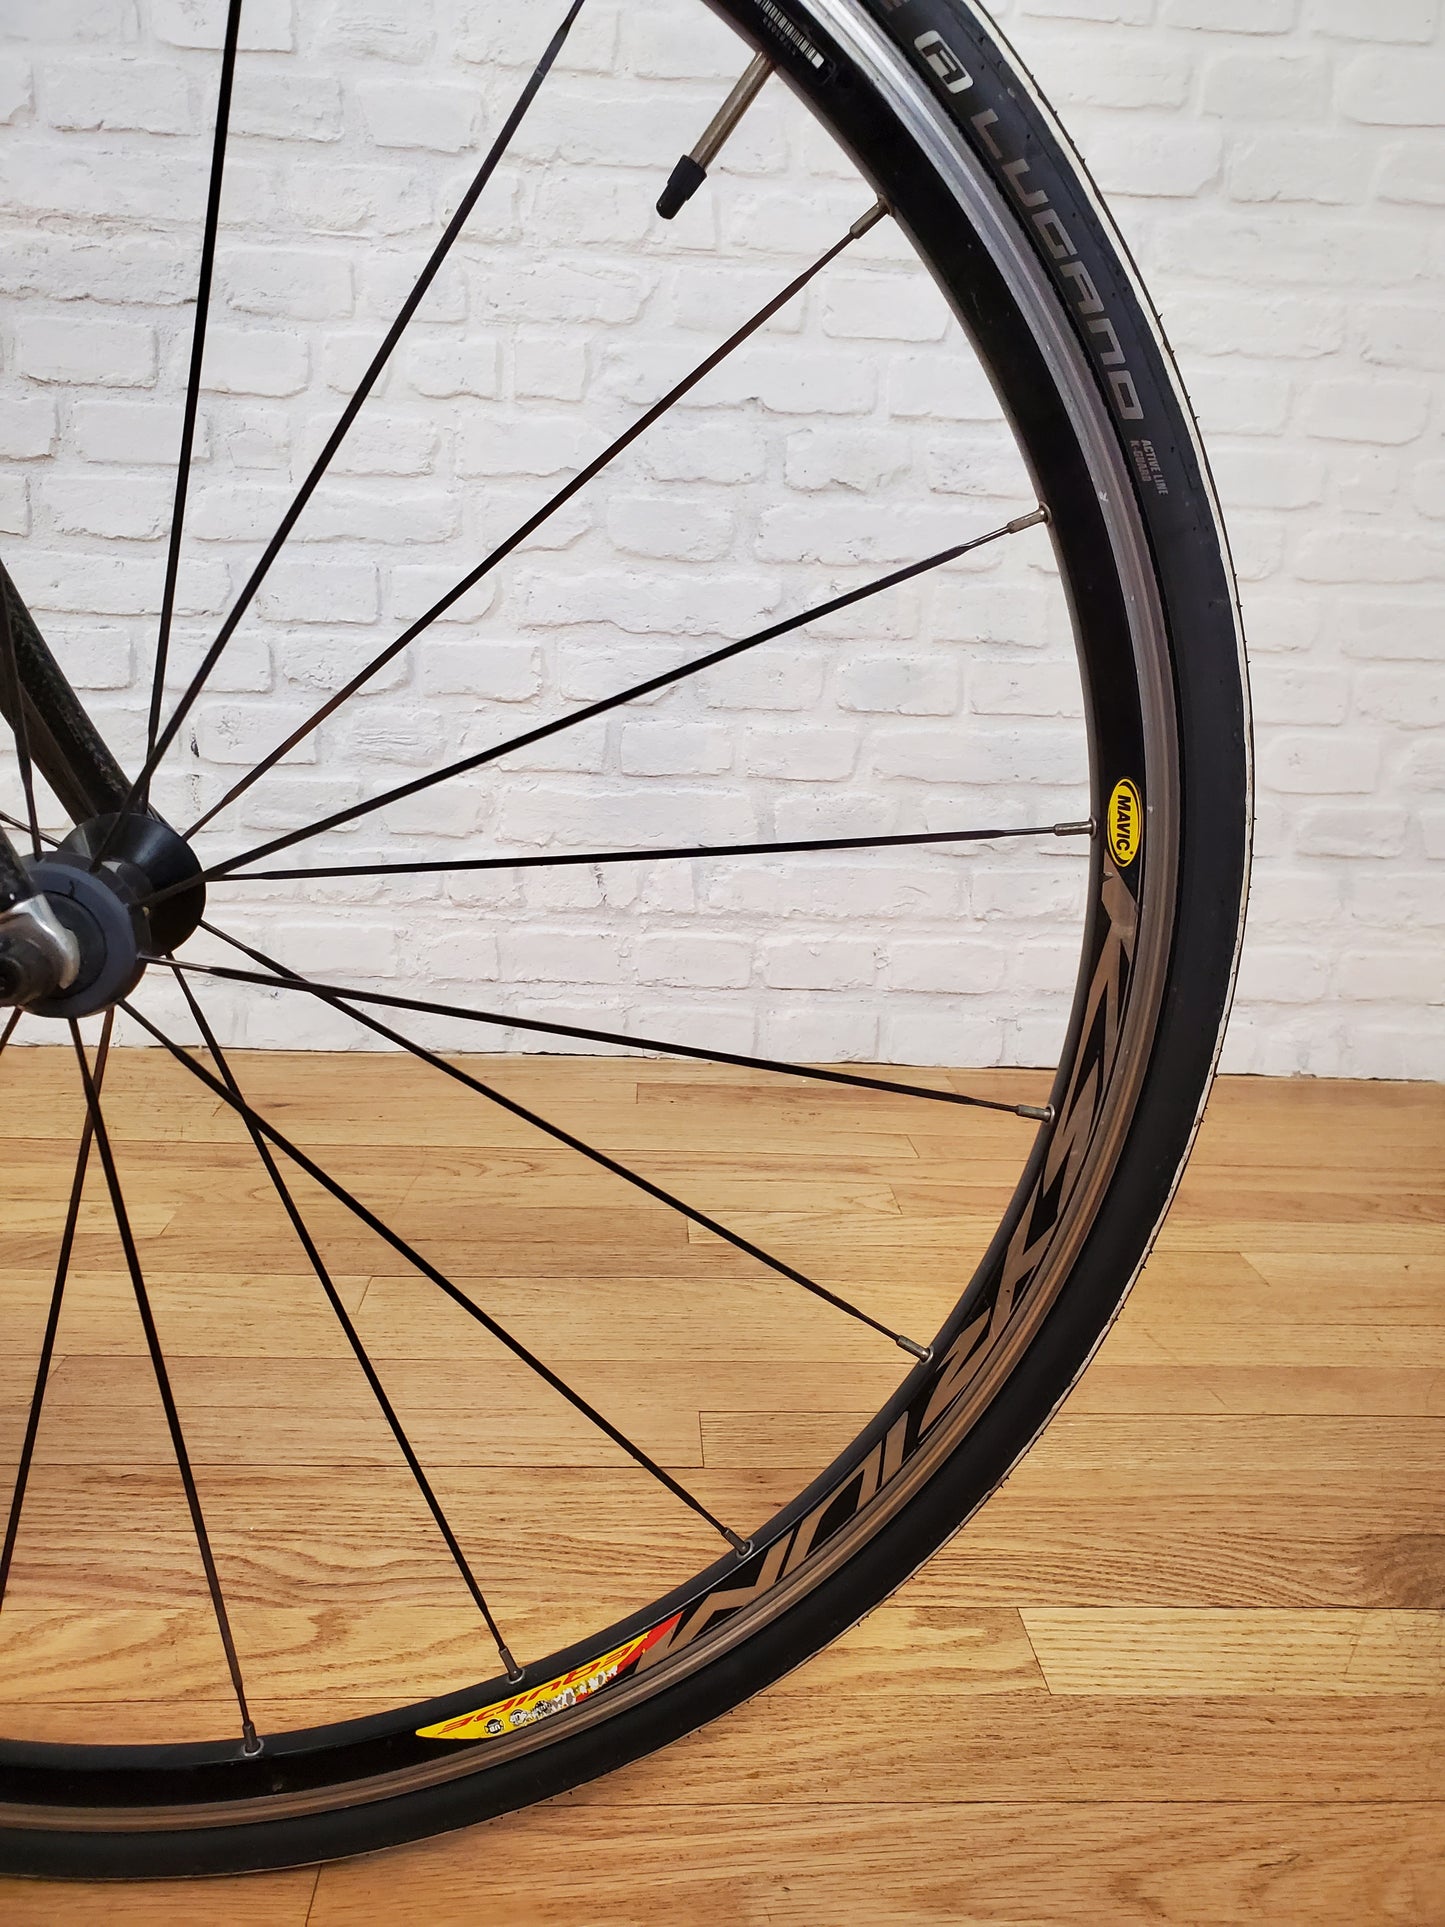 Mavic Ksyrium Equipe wheels with Schwalbe tires